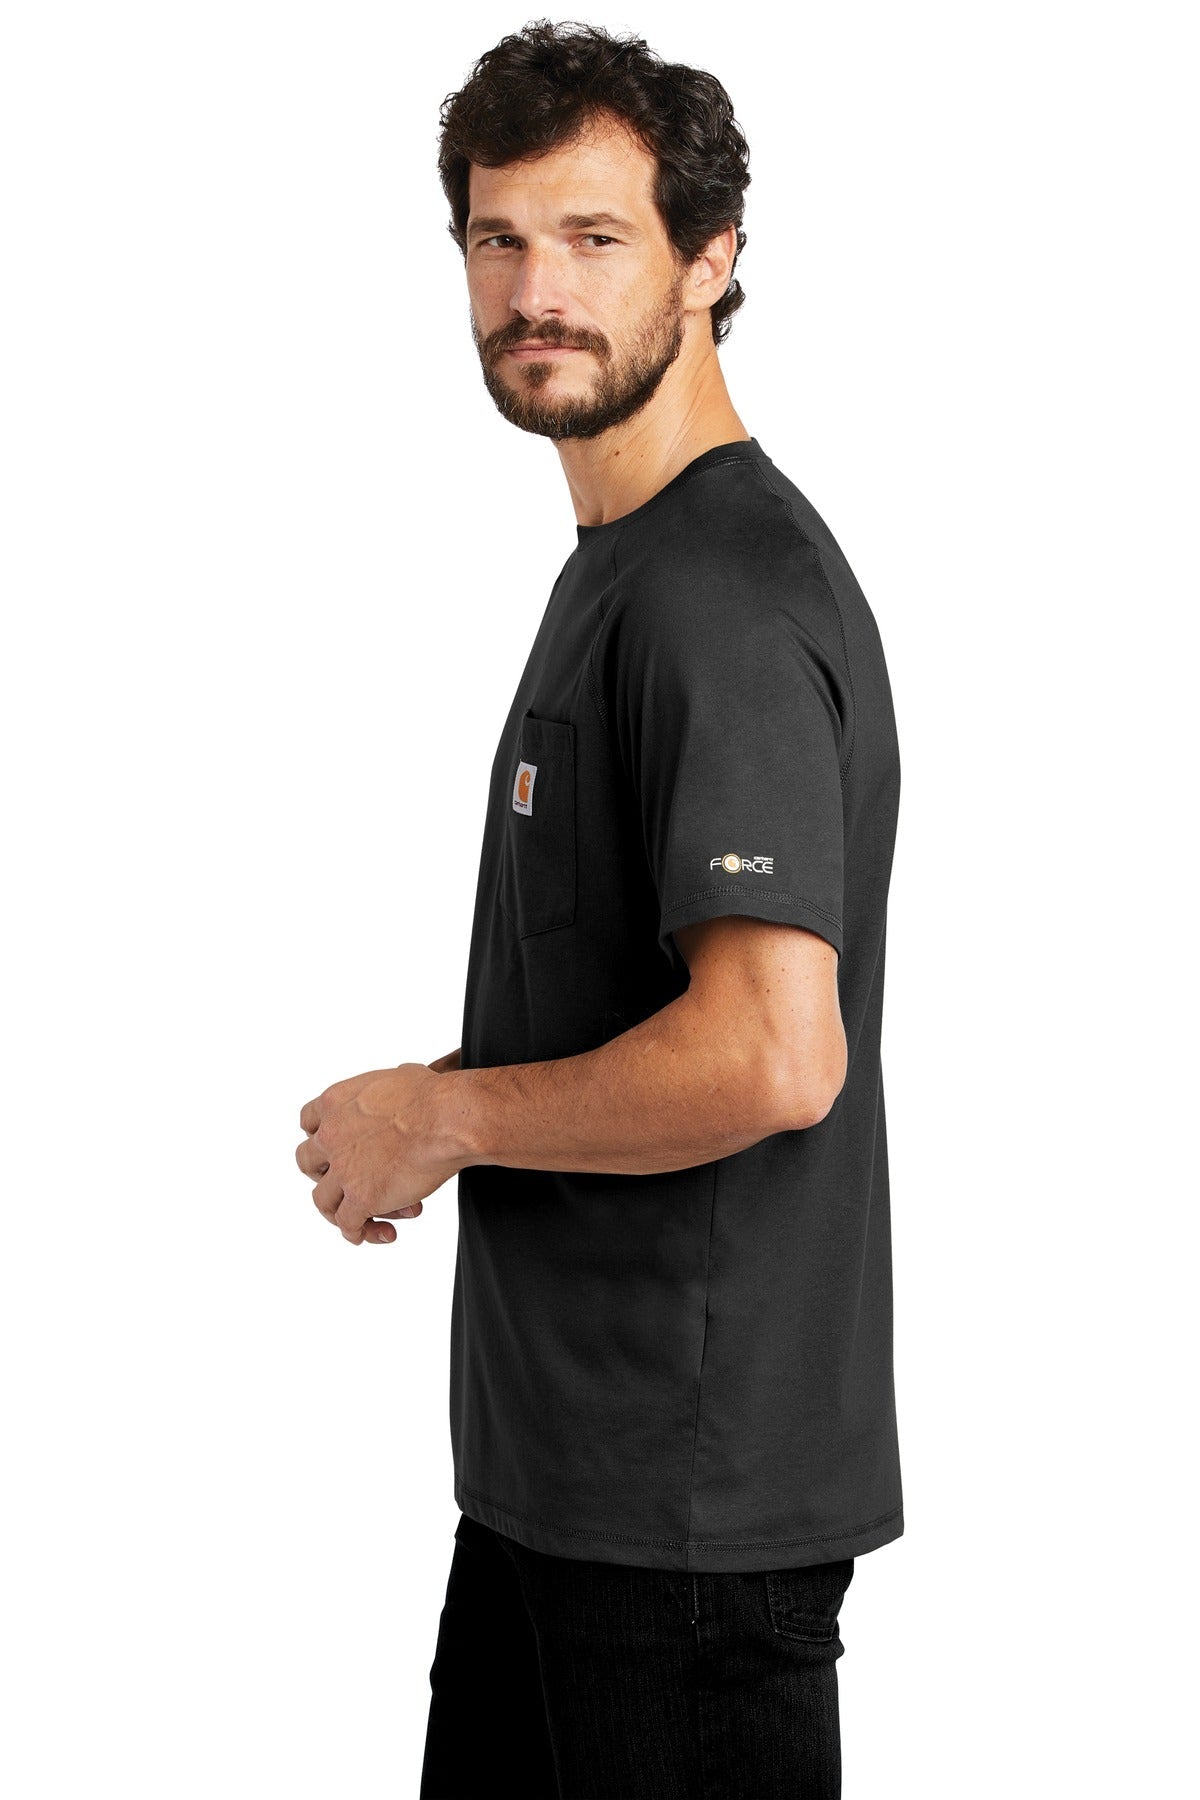 Carhartt Force ® Cotton Delmont Short Sleeve T-Shirt. CT100410 - DFW Impression